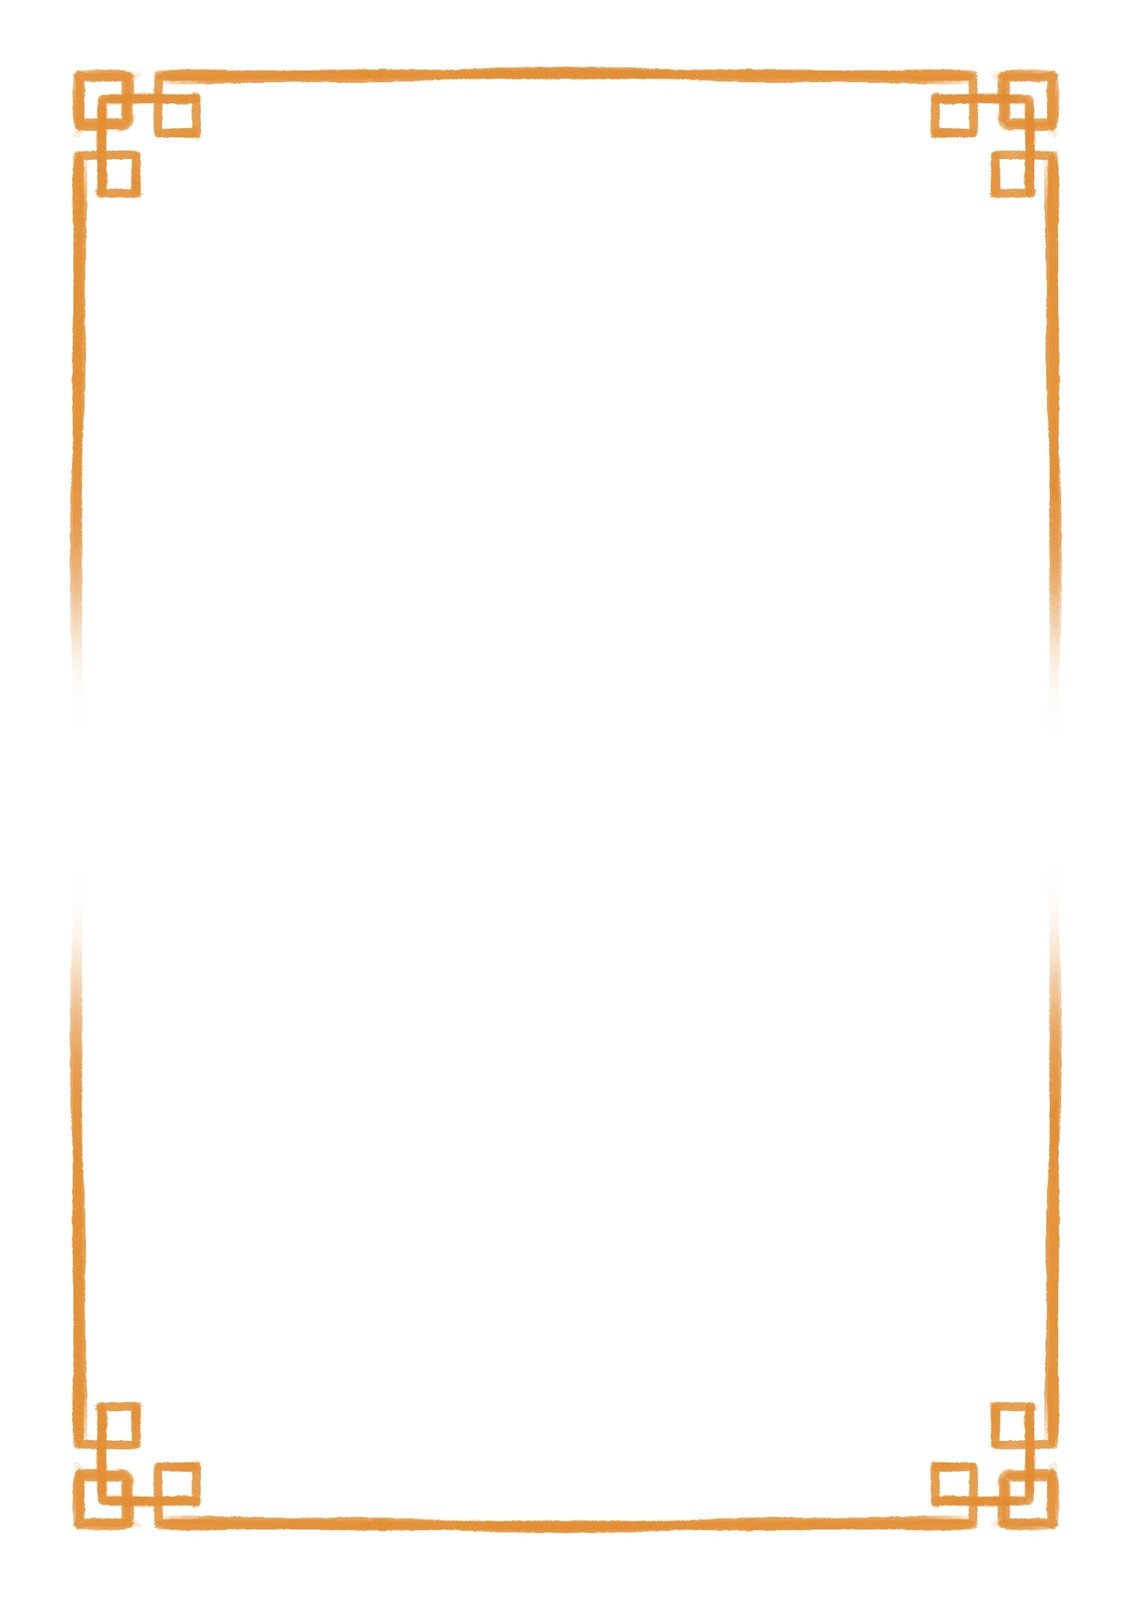 https://marketplace.canva.com/EAFxrn6YwGg/1/0/1131w/canva-white-orange-minimalist-frame-paper-document-qr14iHkjBY8.jpg